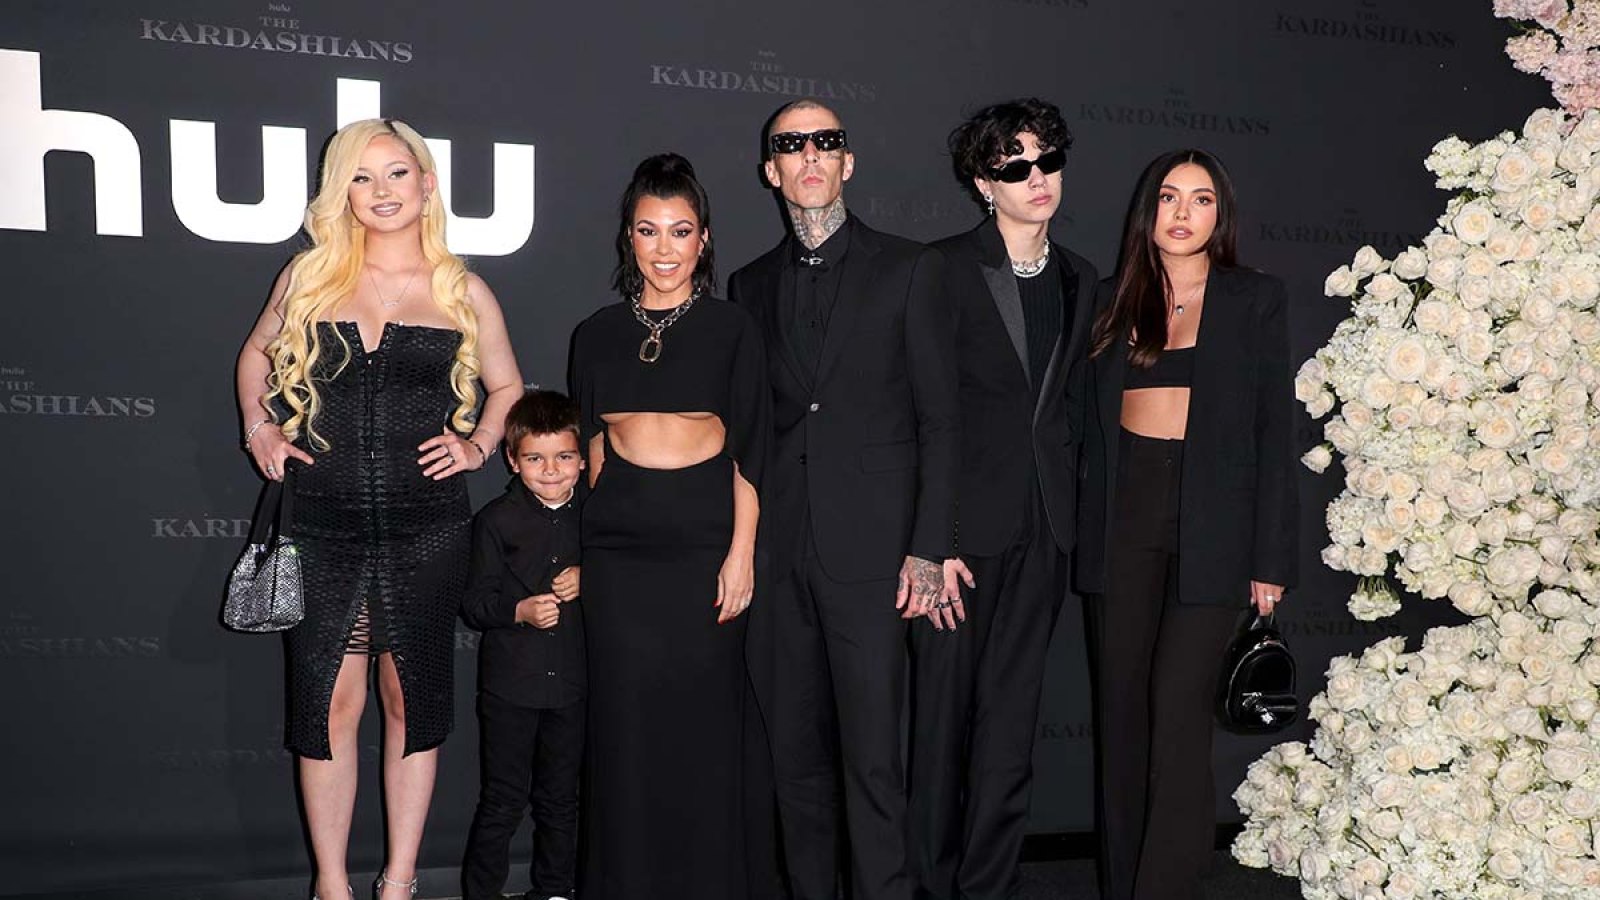 Kourtney Kardashian Shares New Family Photos From BDay My Heart Is Full